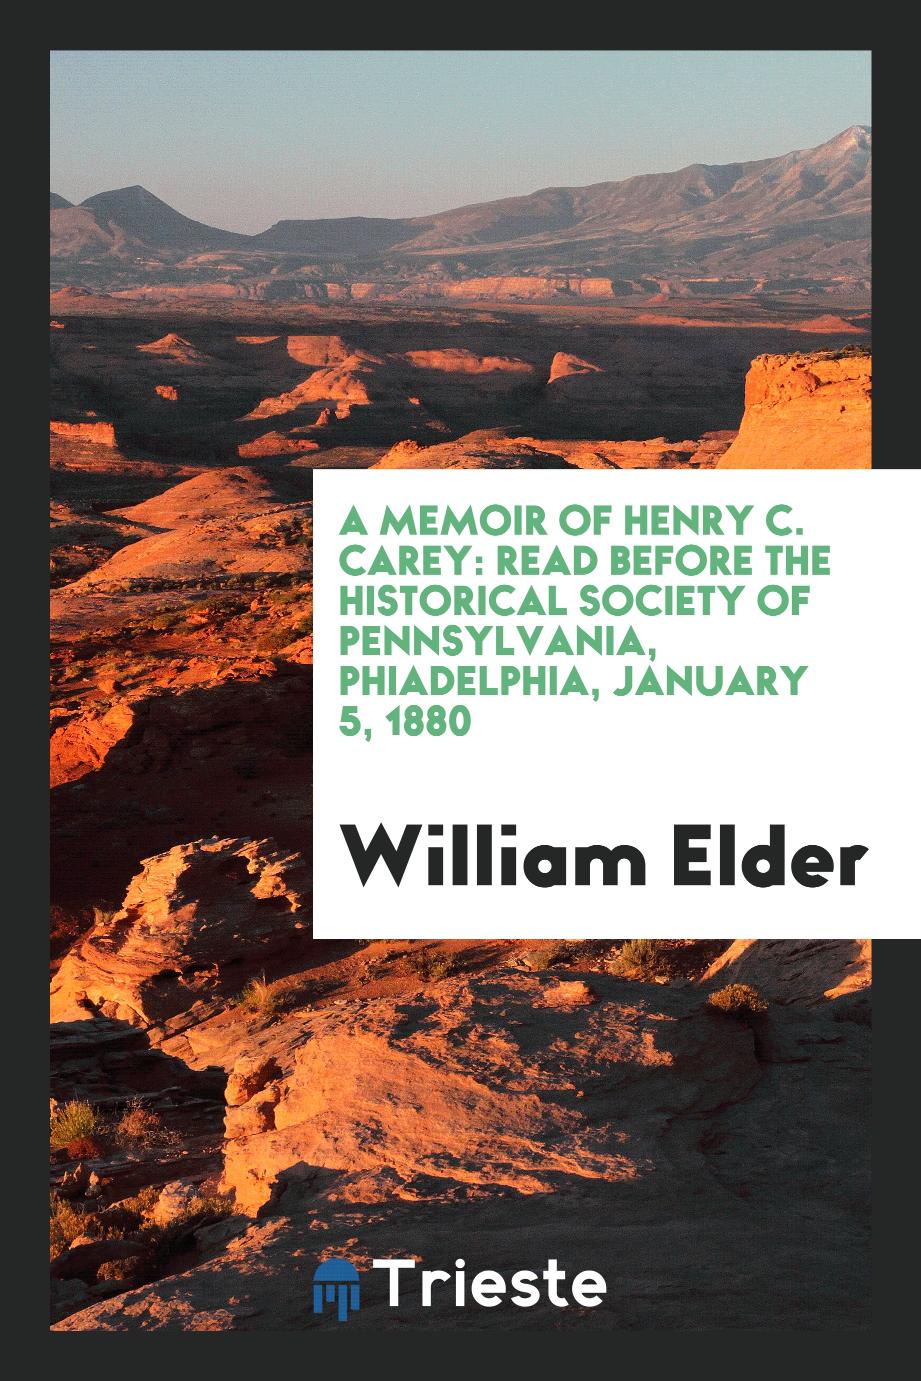 A Memoir of Henry C. Carey: Read Before the Historical Society of Pennsylvania, Phiadelphia, January 5, 1880